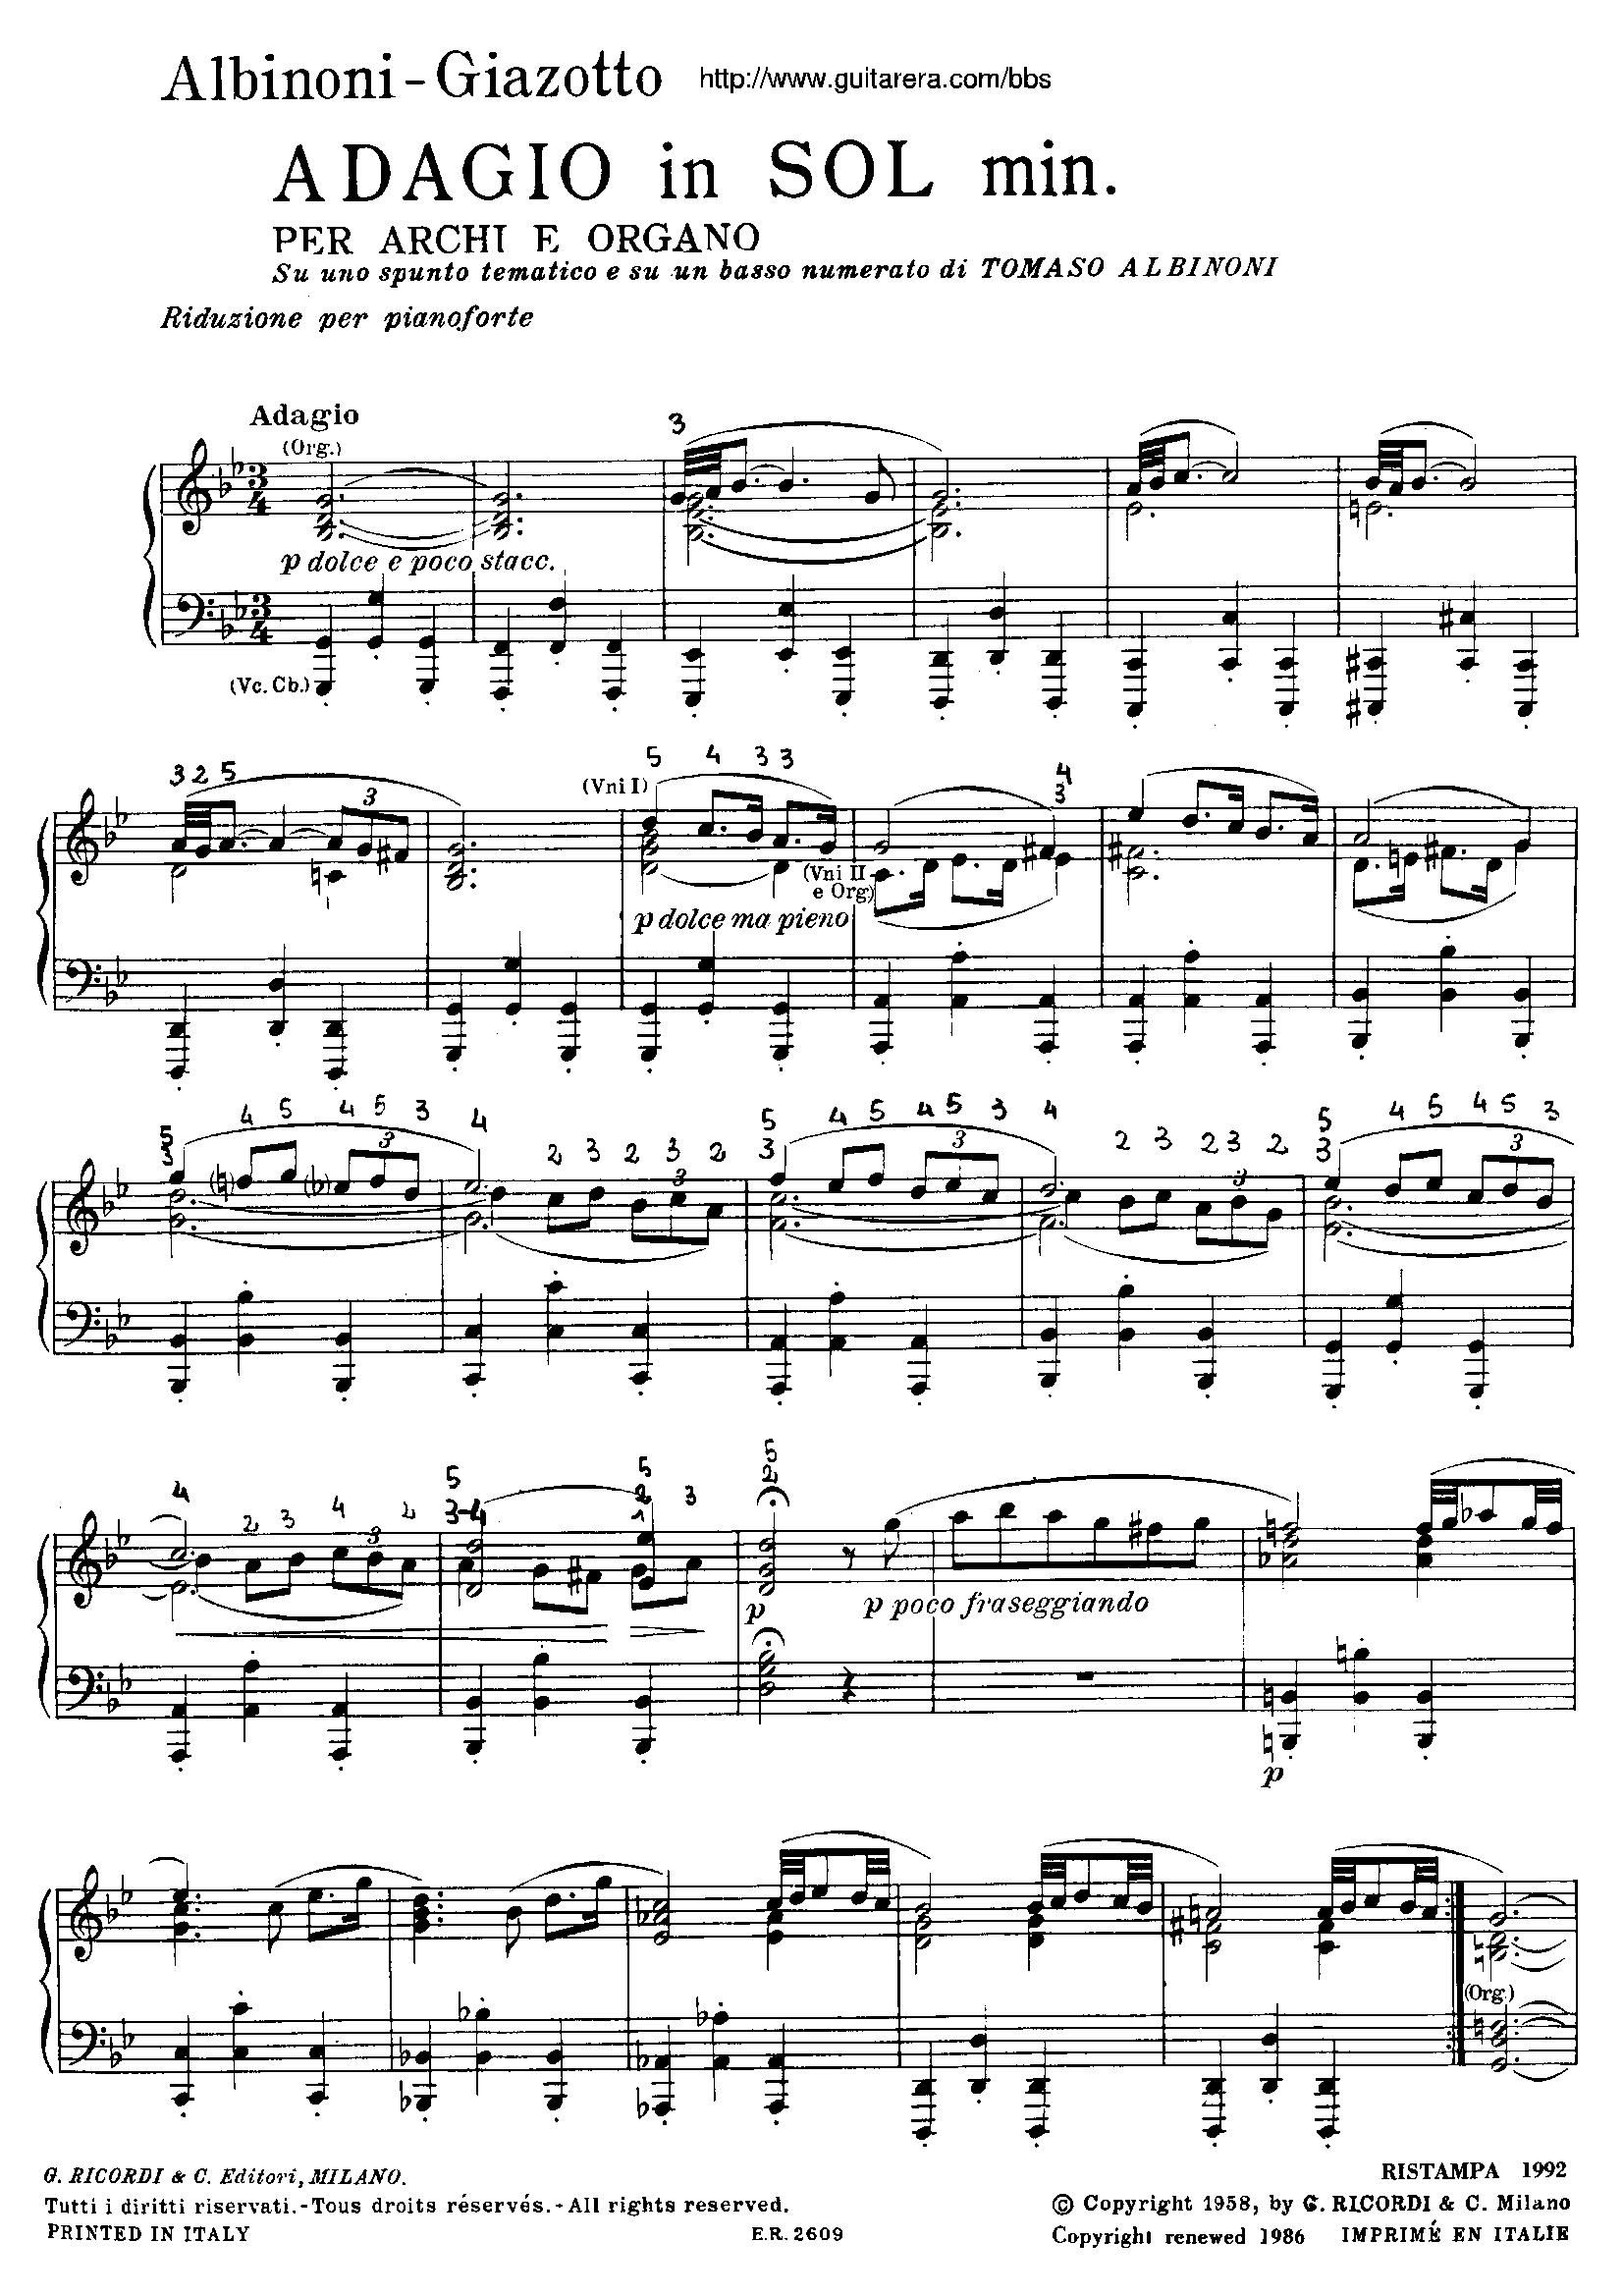 Adagio in G minor gС()1